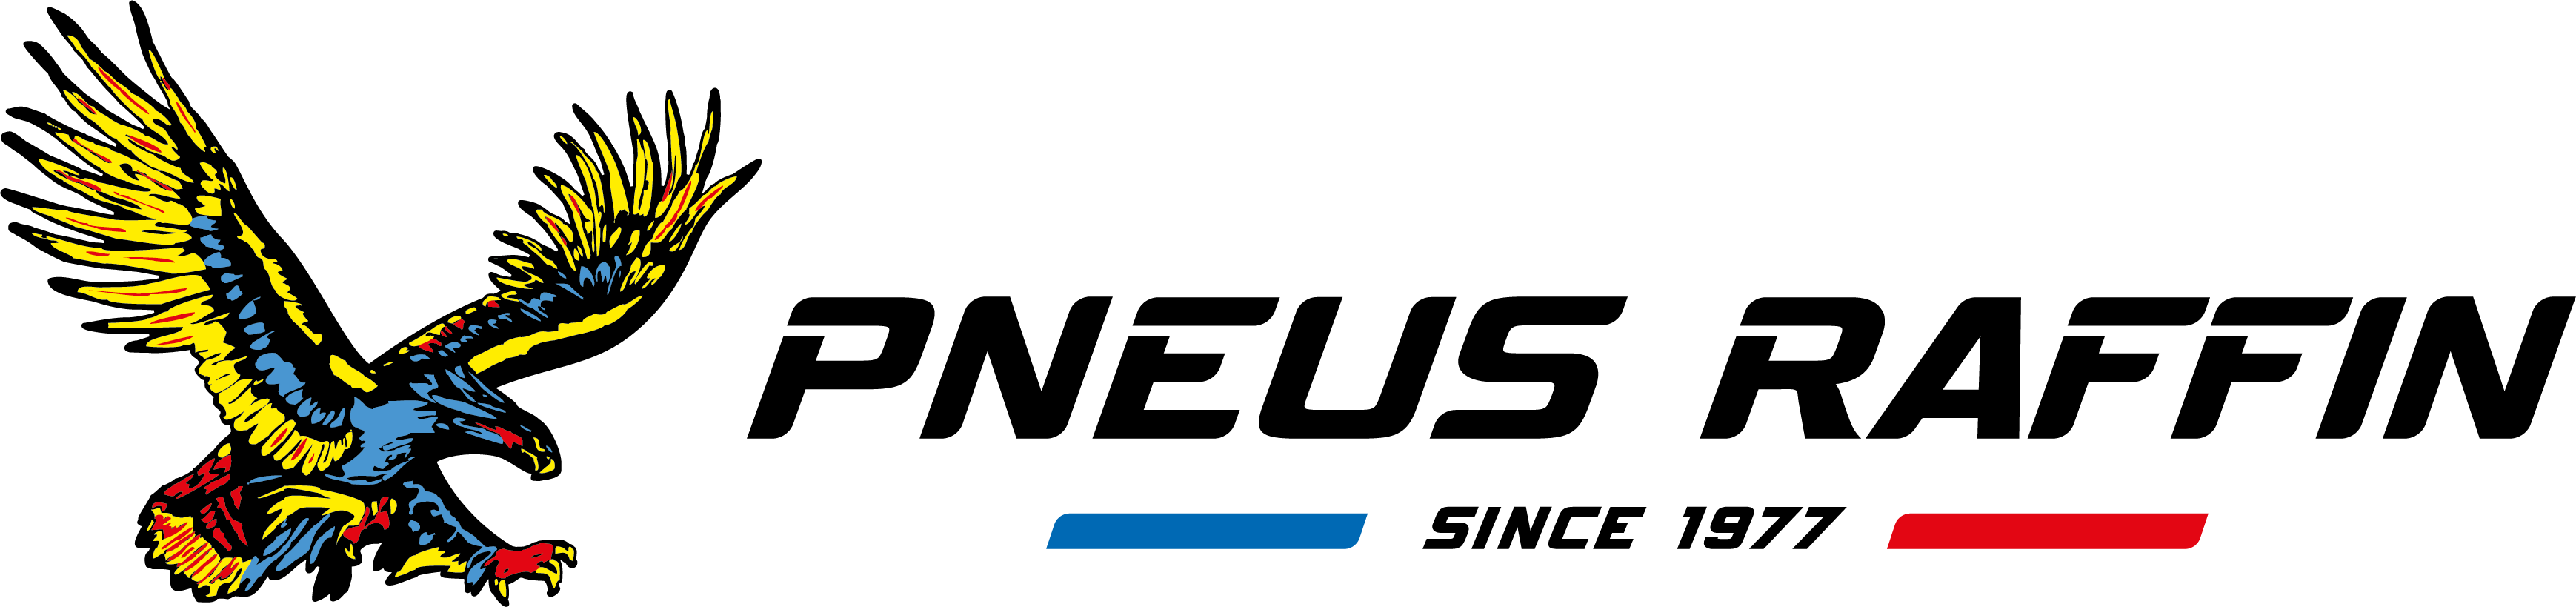 logo pneus raffin horizontal